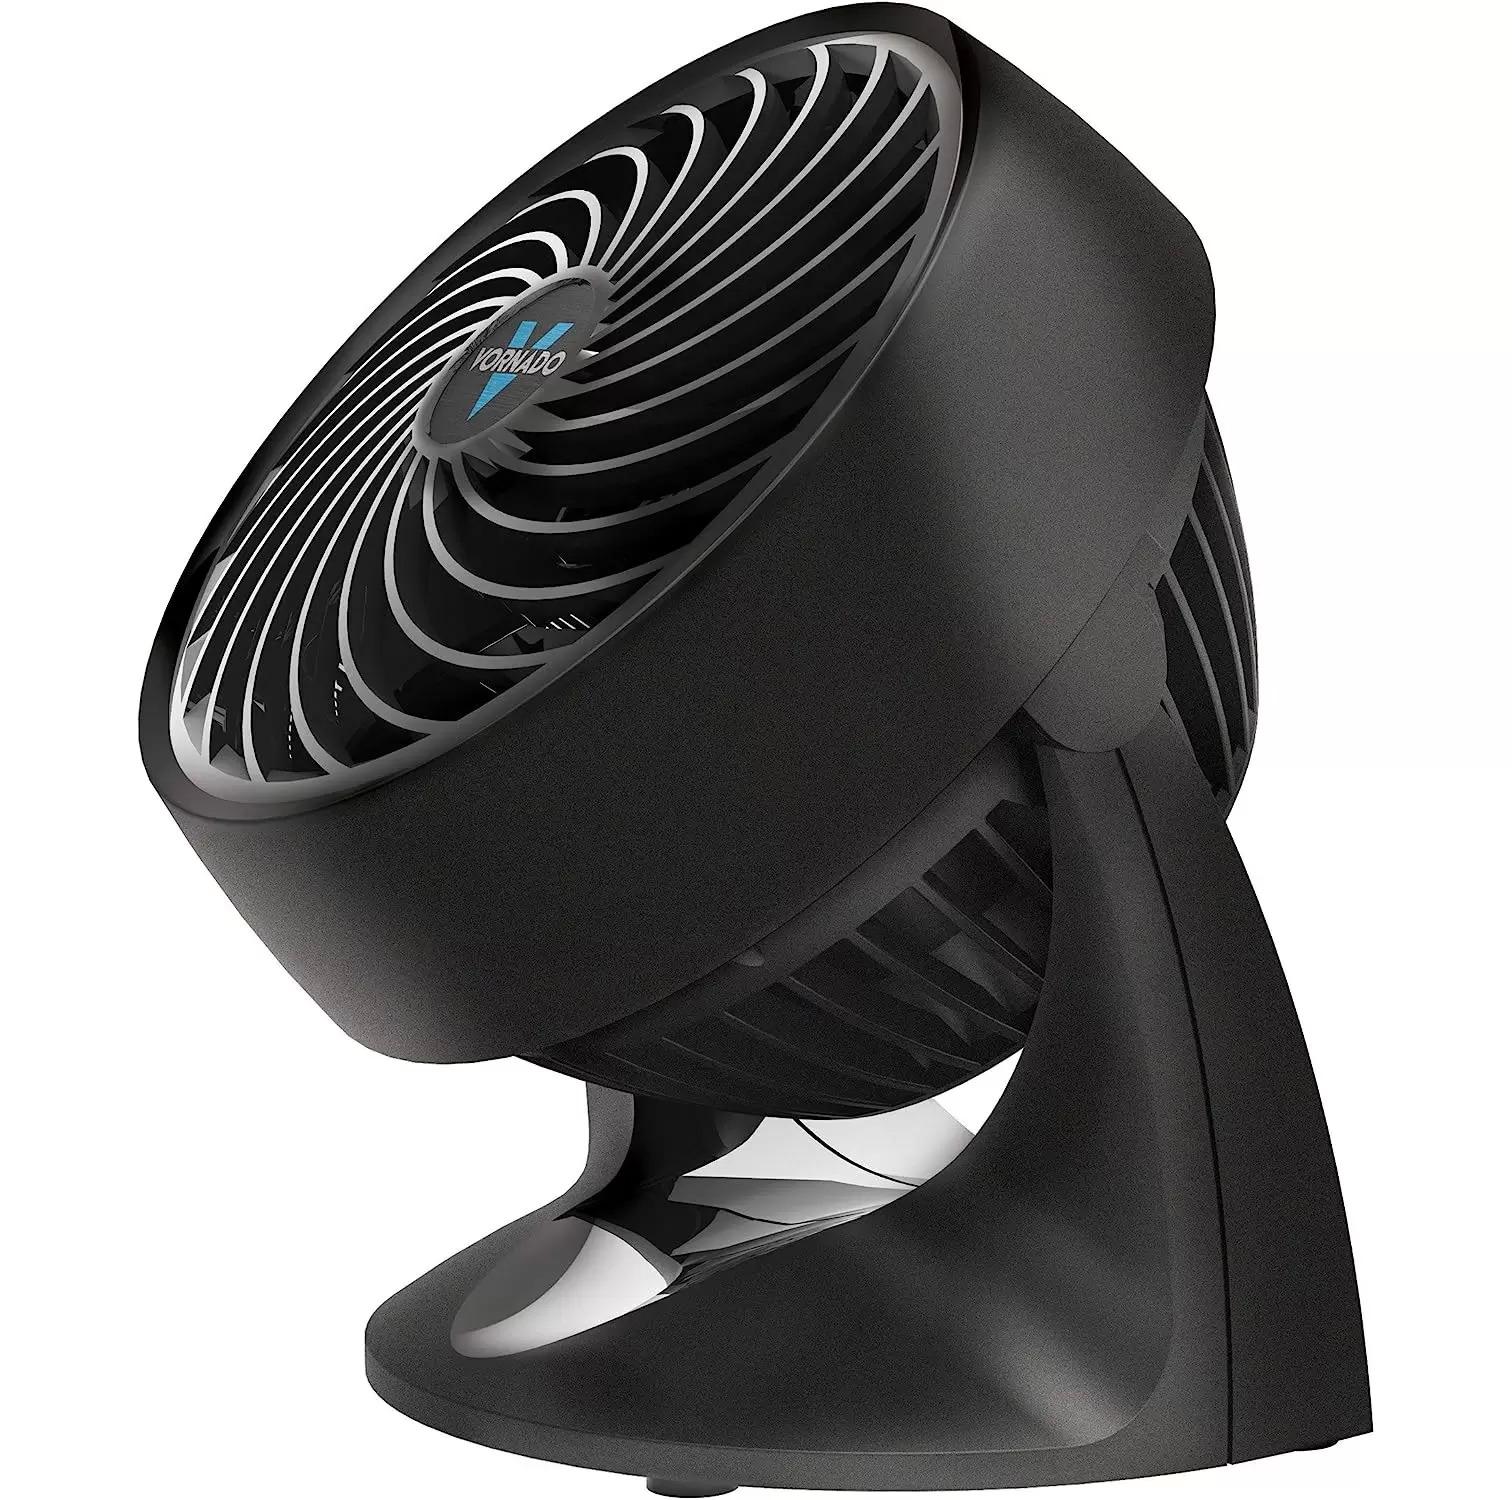 Vornado 133 Compact 2-Speed Small Room Air Circulator Fan for $24.99